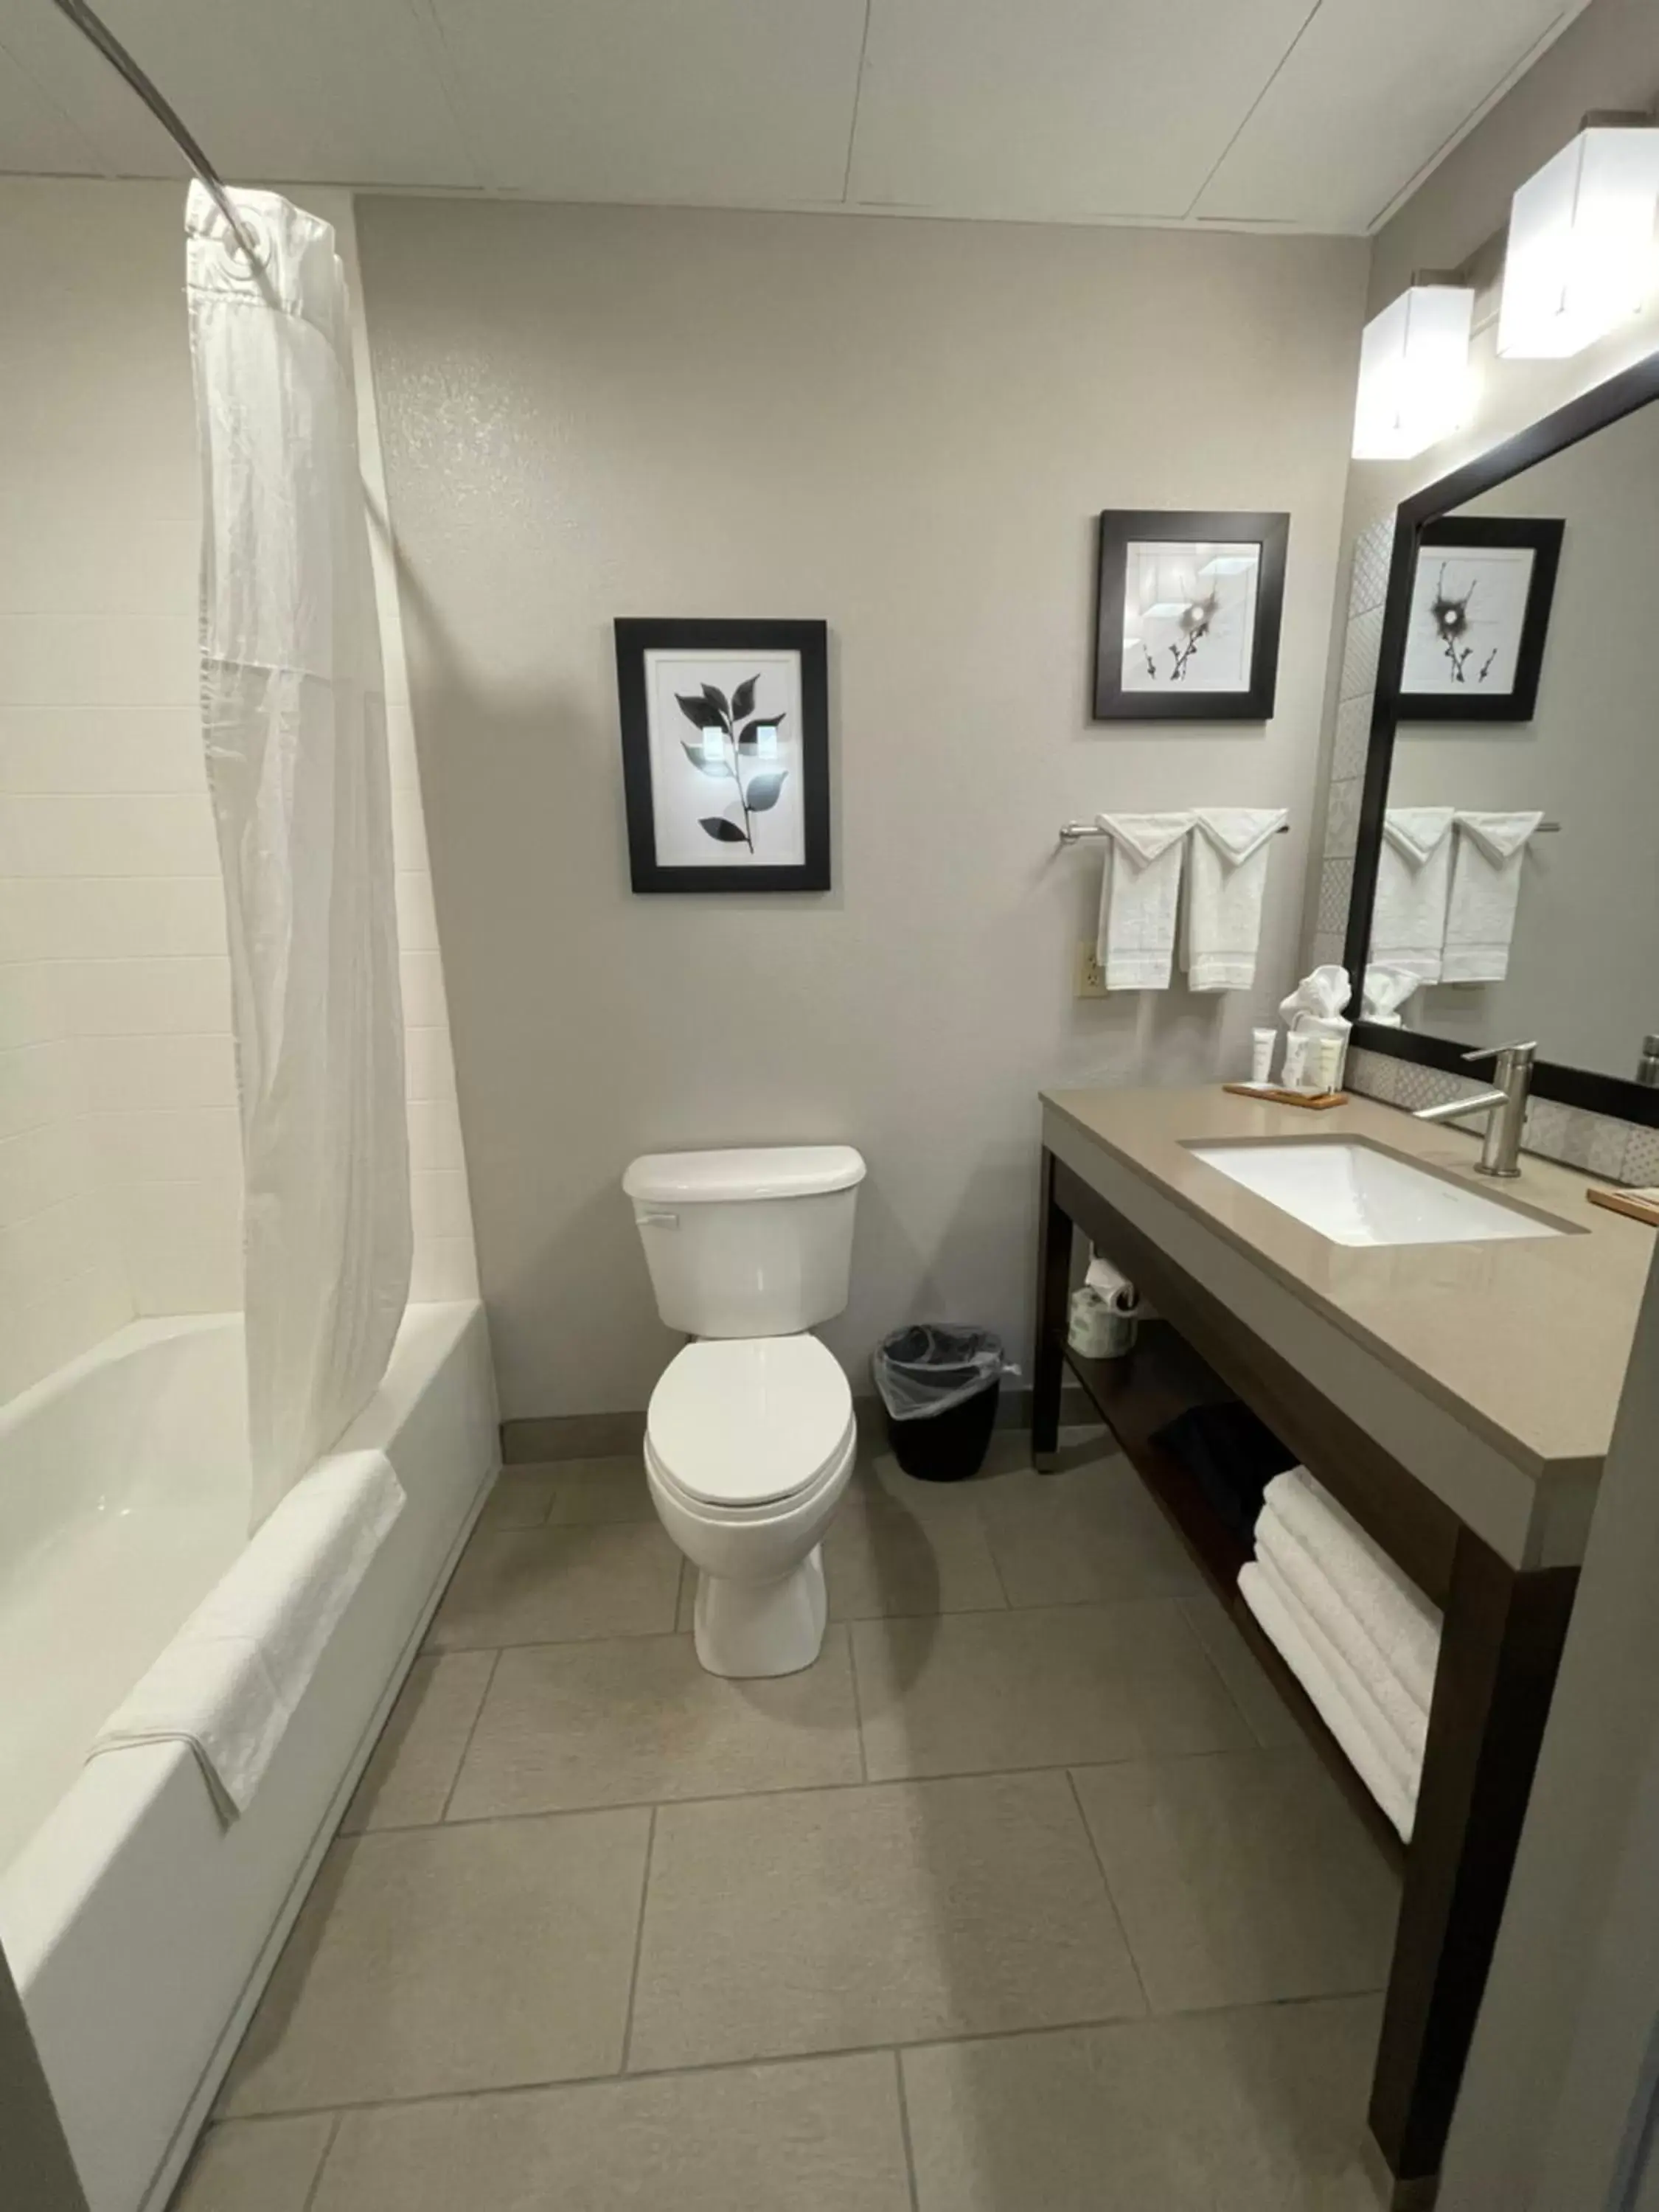 Bathroom in Country Inn & Suites by Radisson, Valdosta, GA - NEWLY RENOVATED